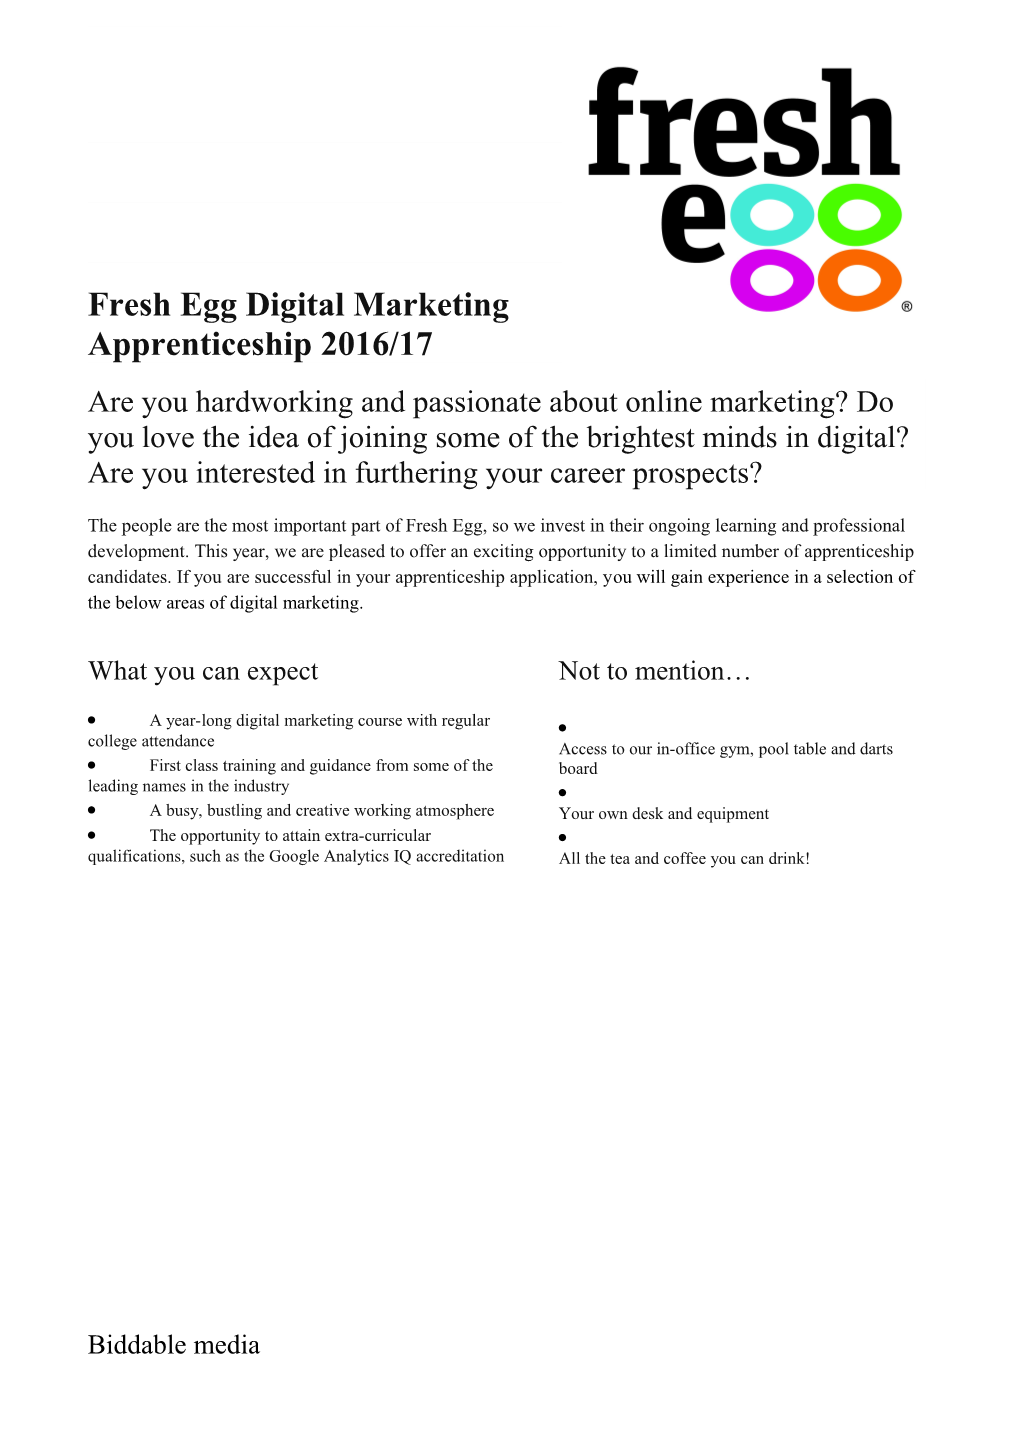 Fresh Egg Digital Marketing Apprenticeship 2016/17